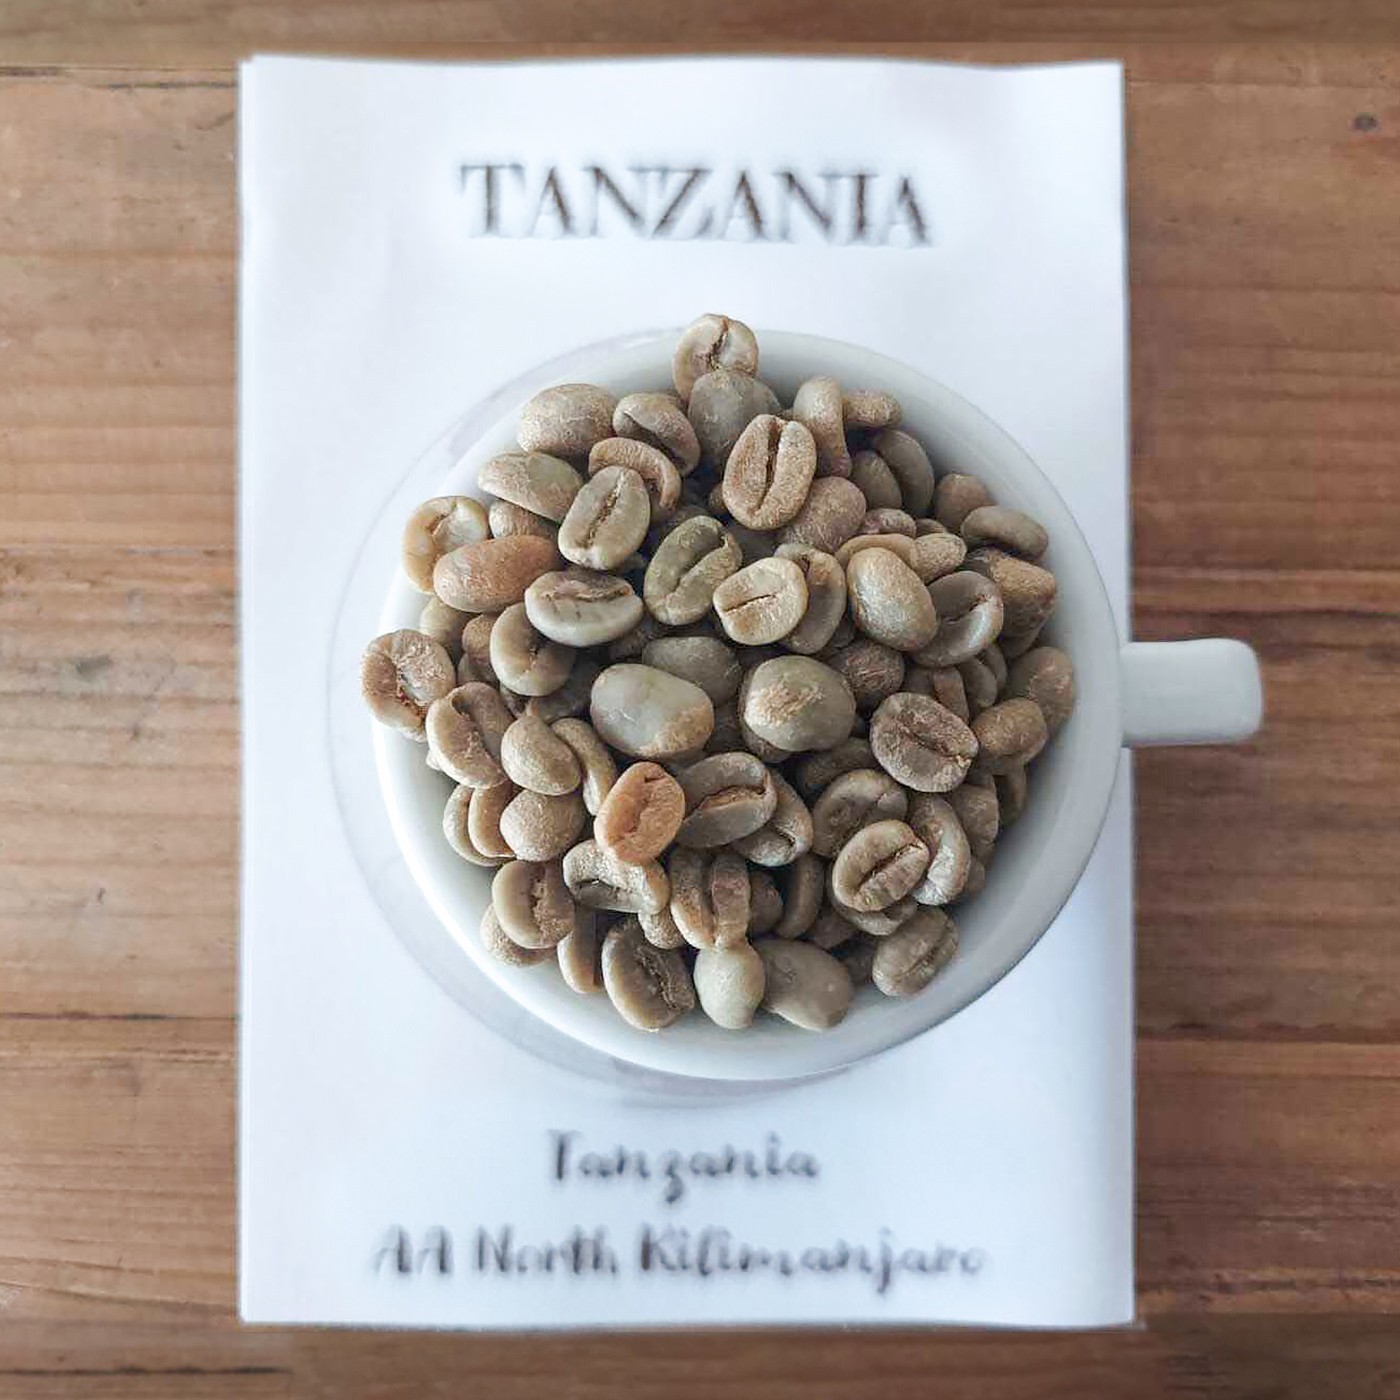 Tanzania Kilimanjaro Caffè Fusari